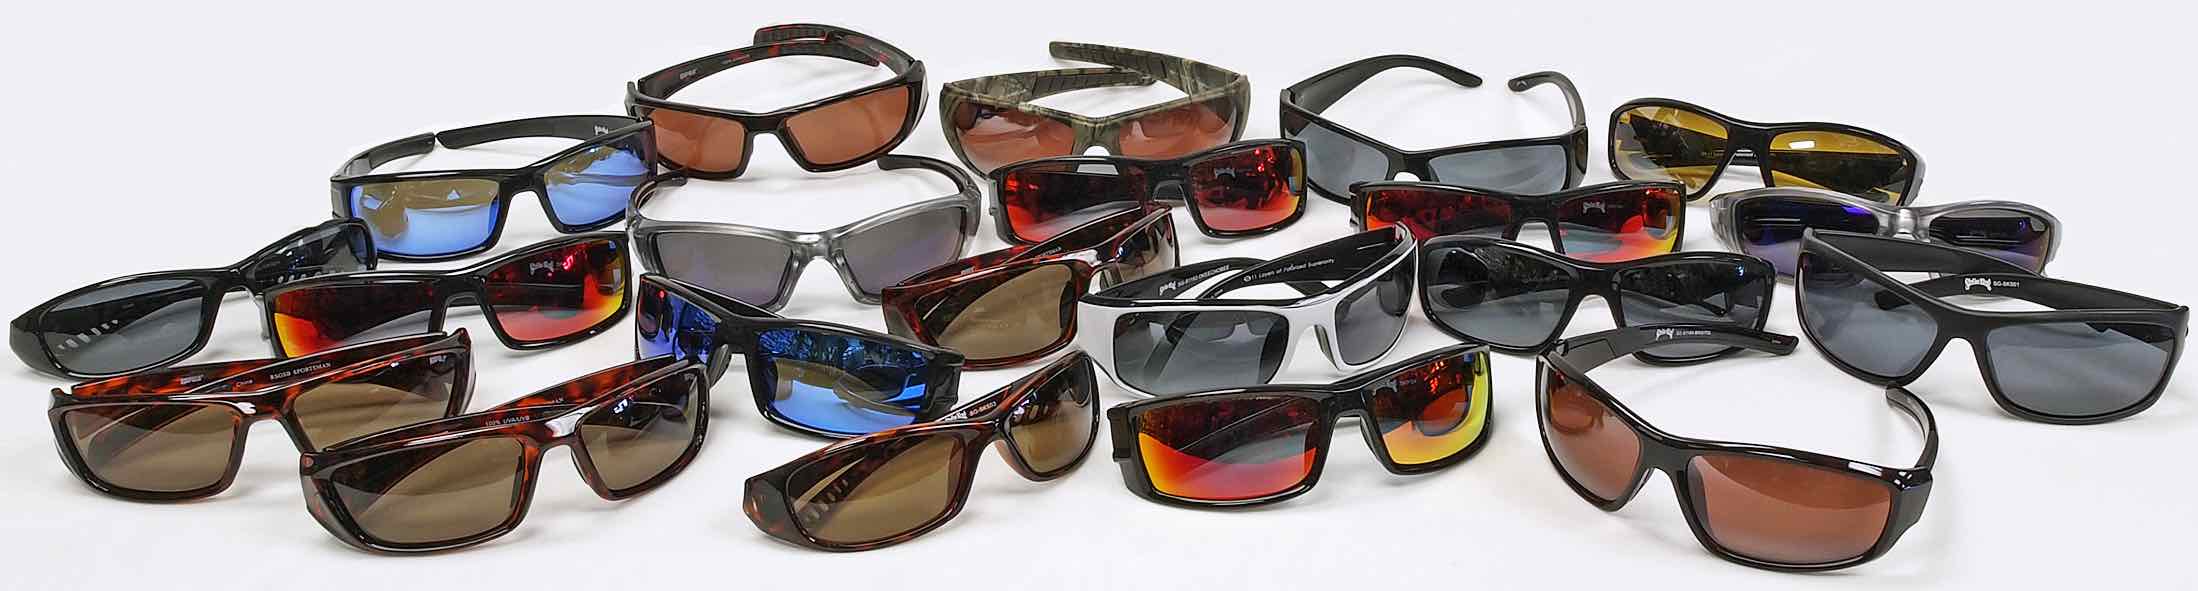 Polarized Sunglasses, Magnifiers & Eyewear Accessories